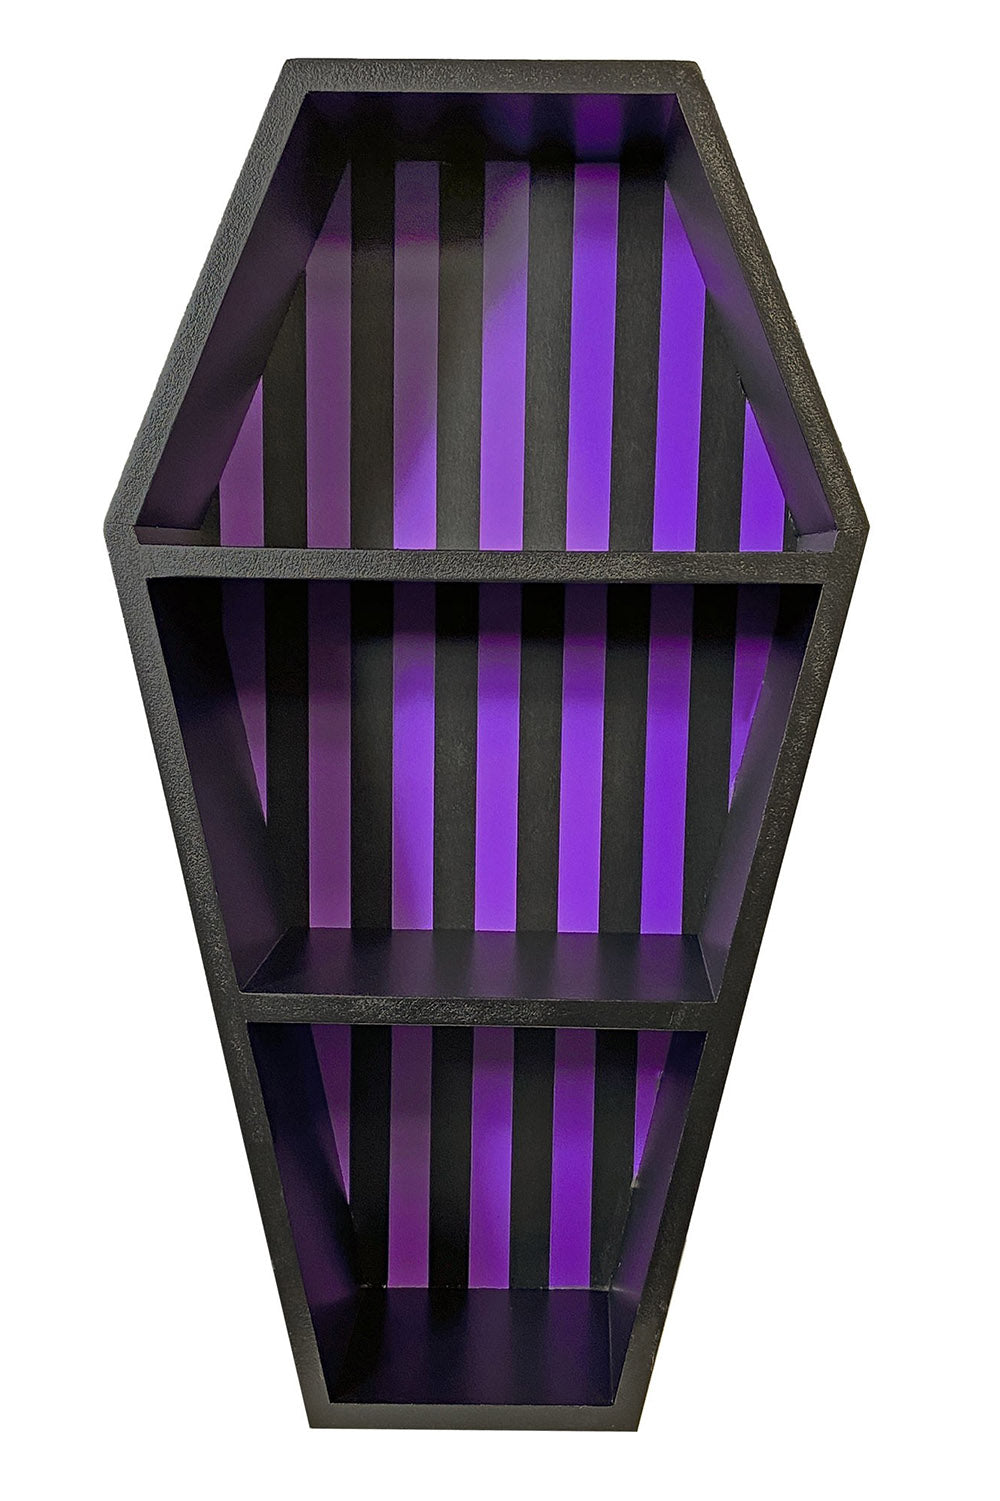 Striped Coffin Shelf [Purple/Black]